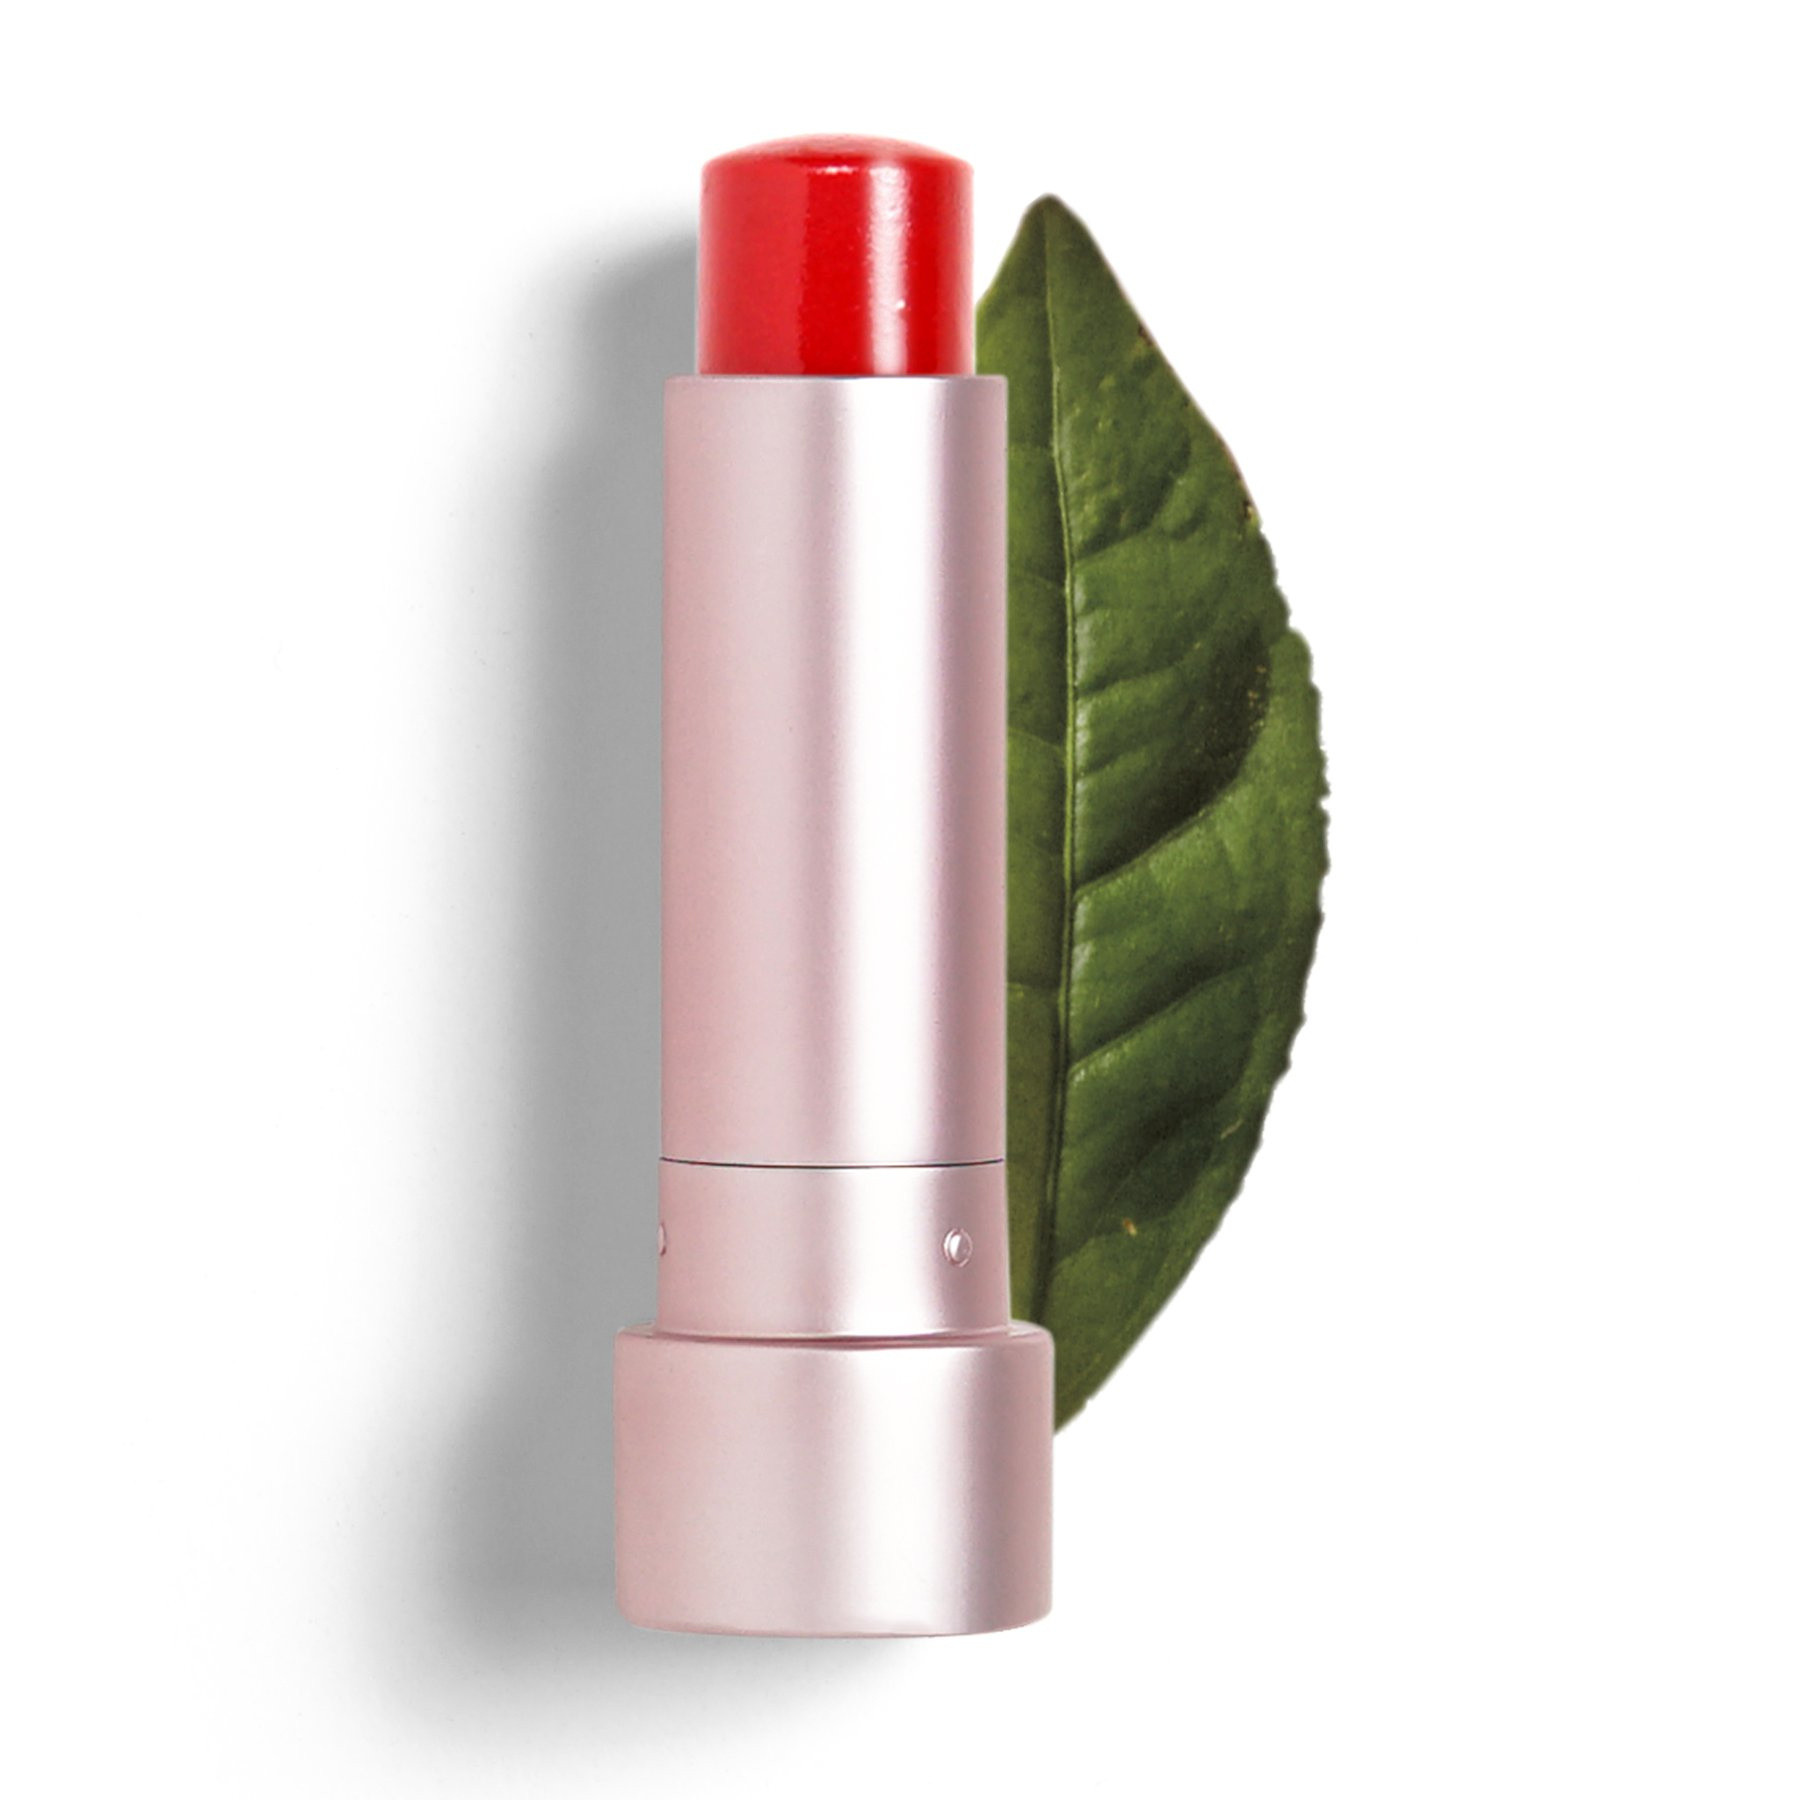 Tea Balm Tinted Lip Treatment | cherry Tea, Rosso, large